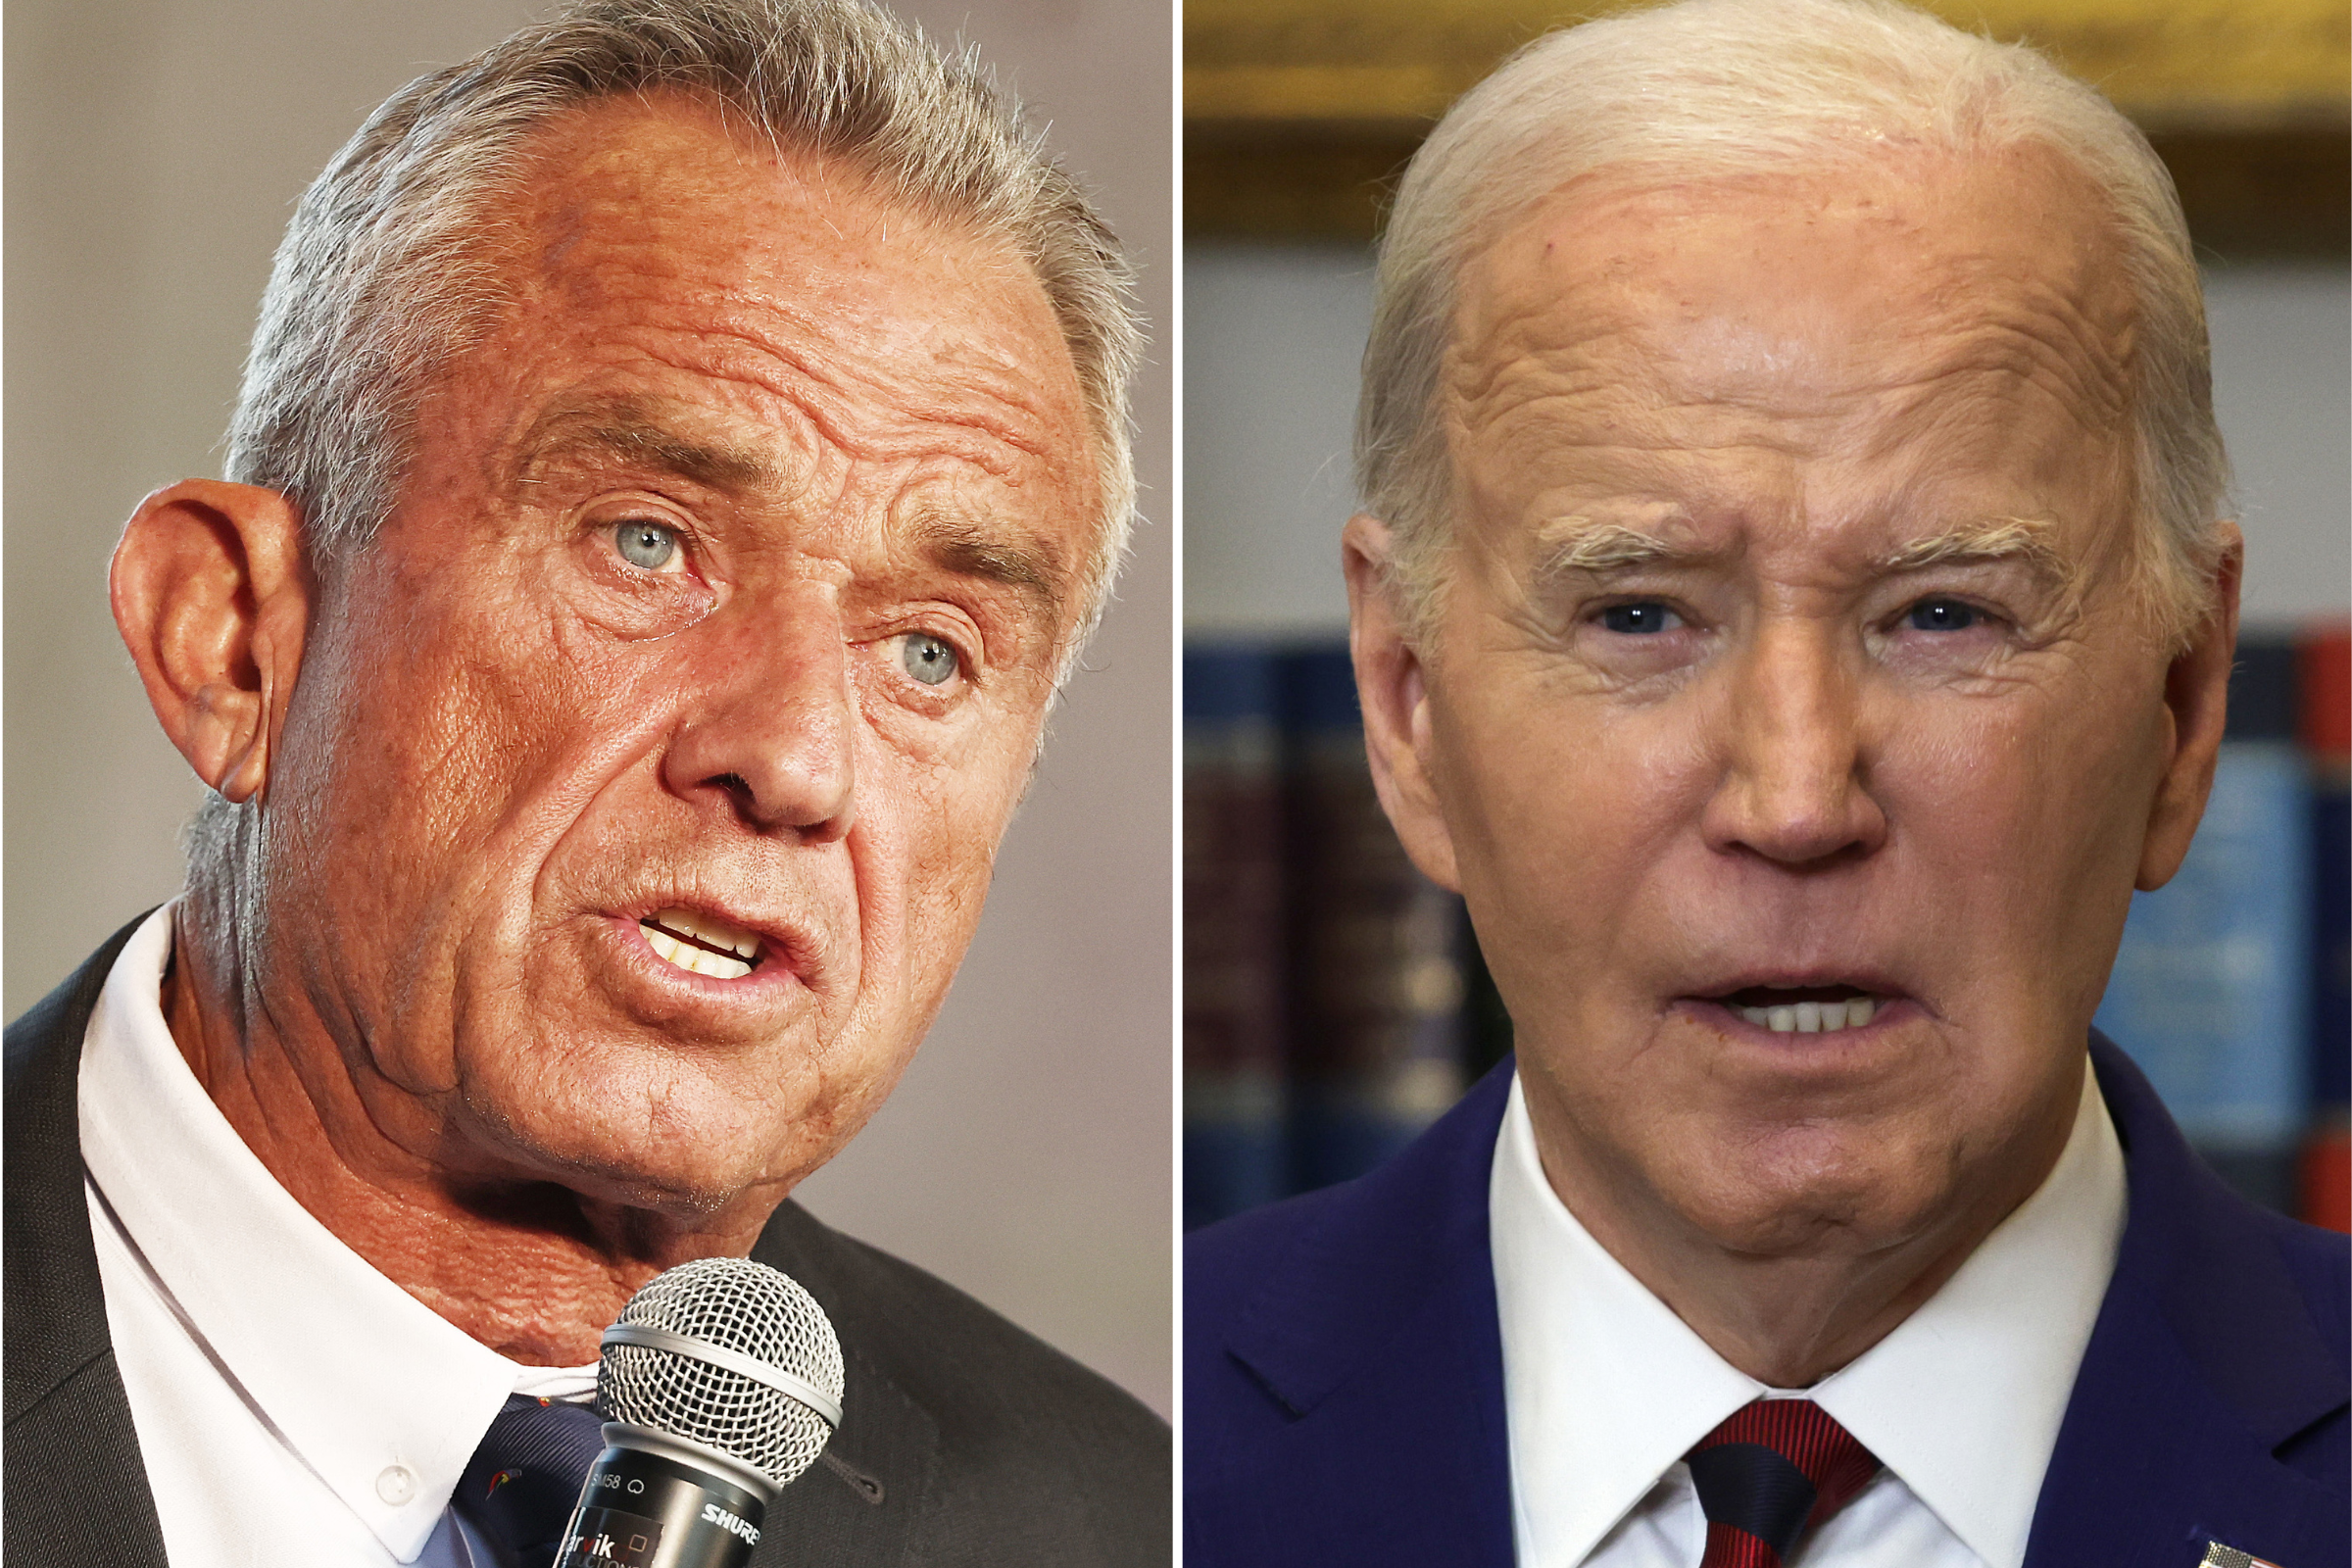 RFK Jr hurting Joe Biden more than Donald Trump in five battleground states